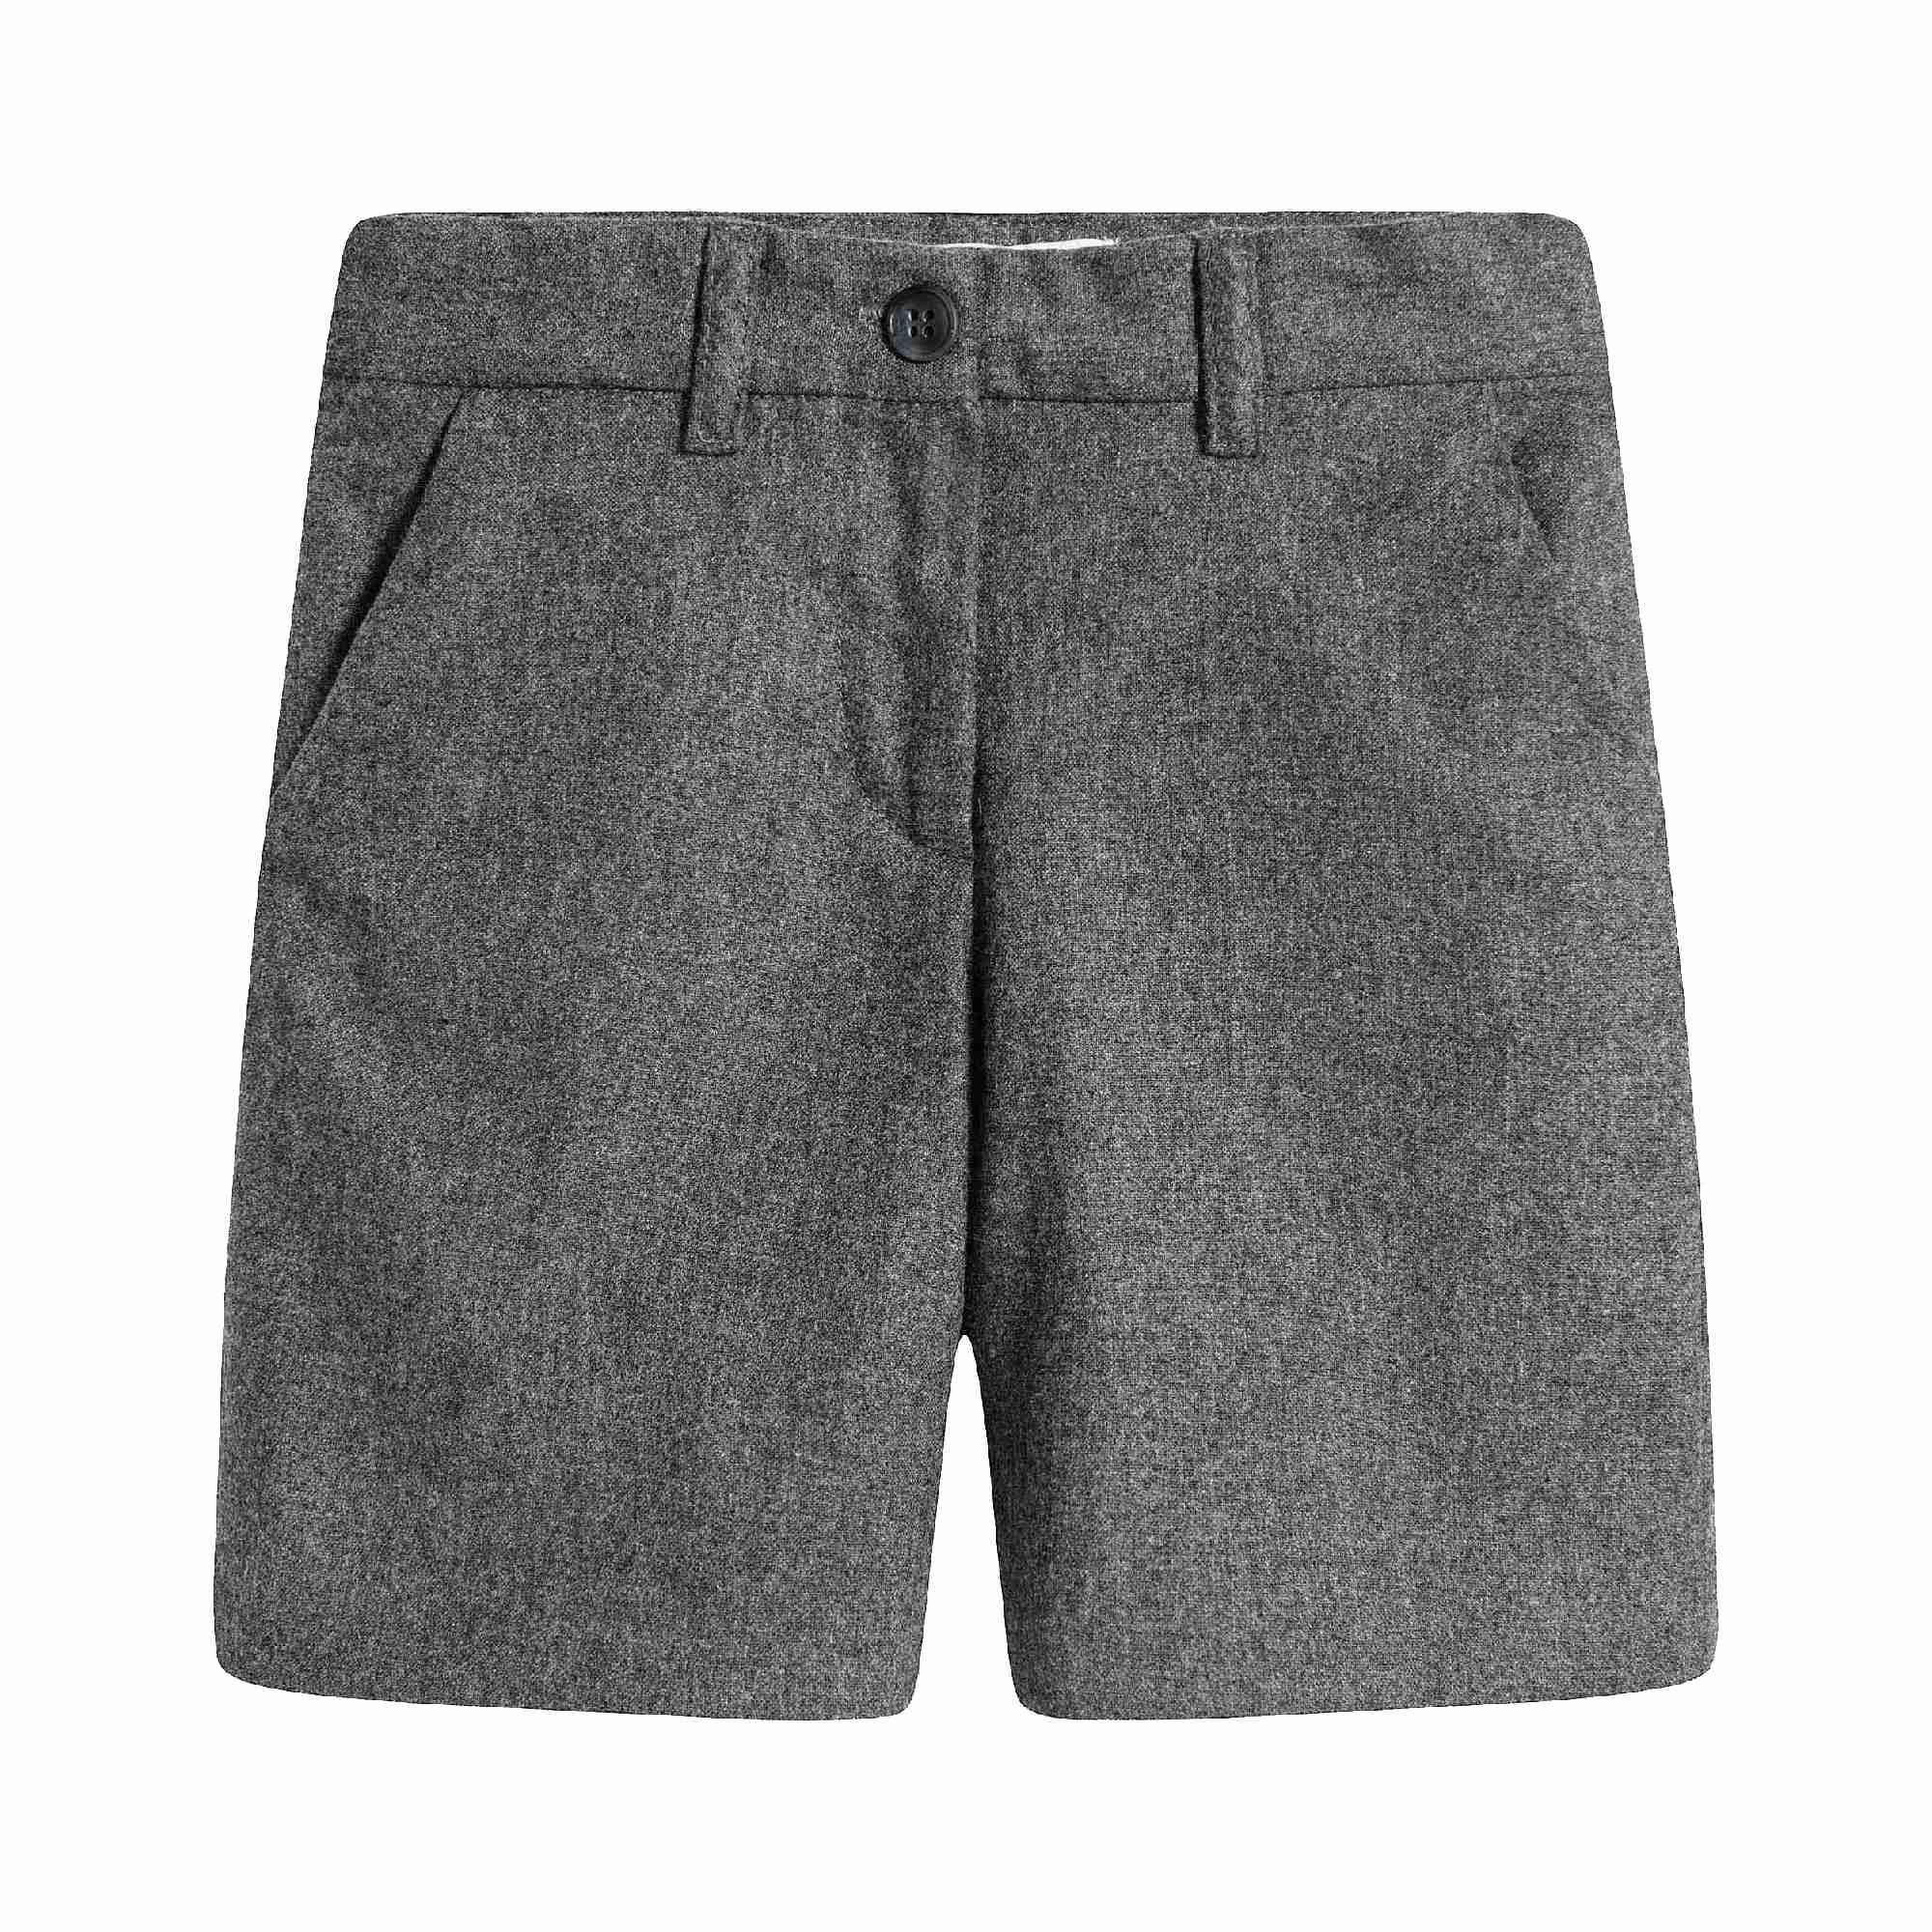 Girls Dark Grey Bermudas Shorts